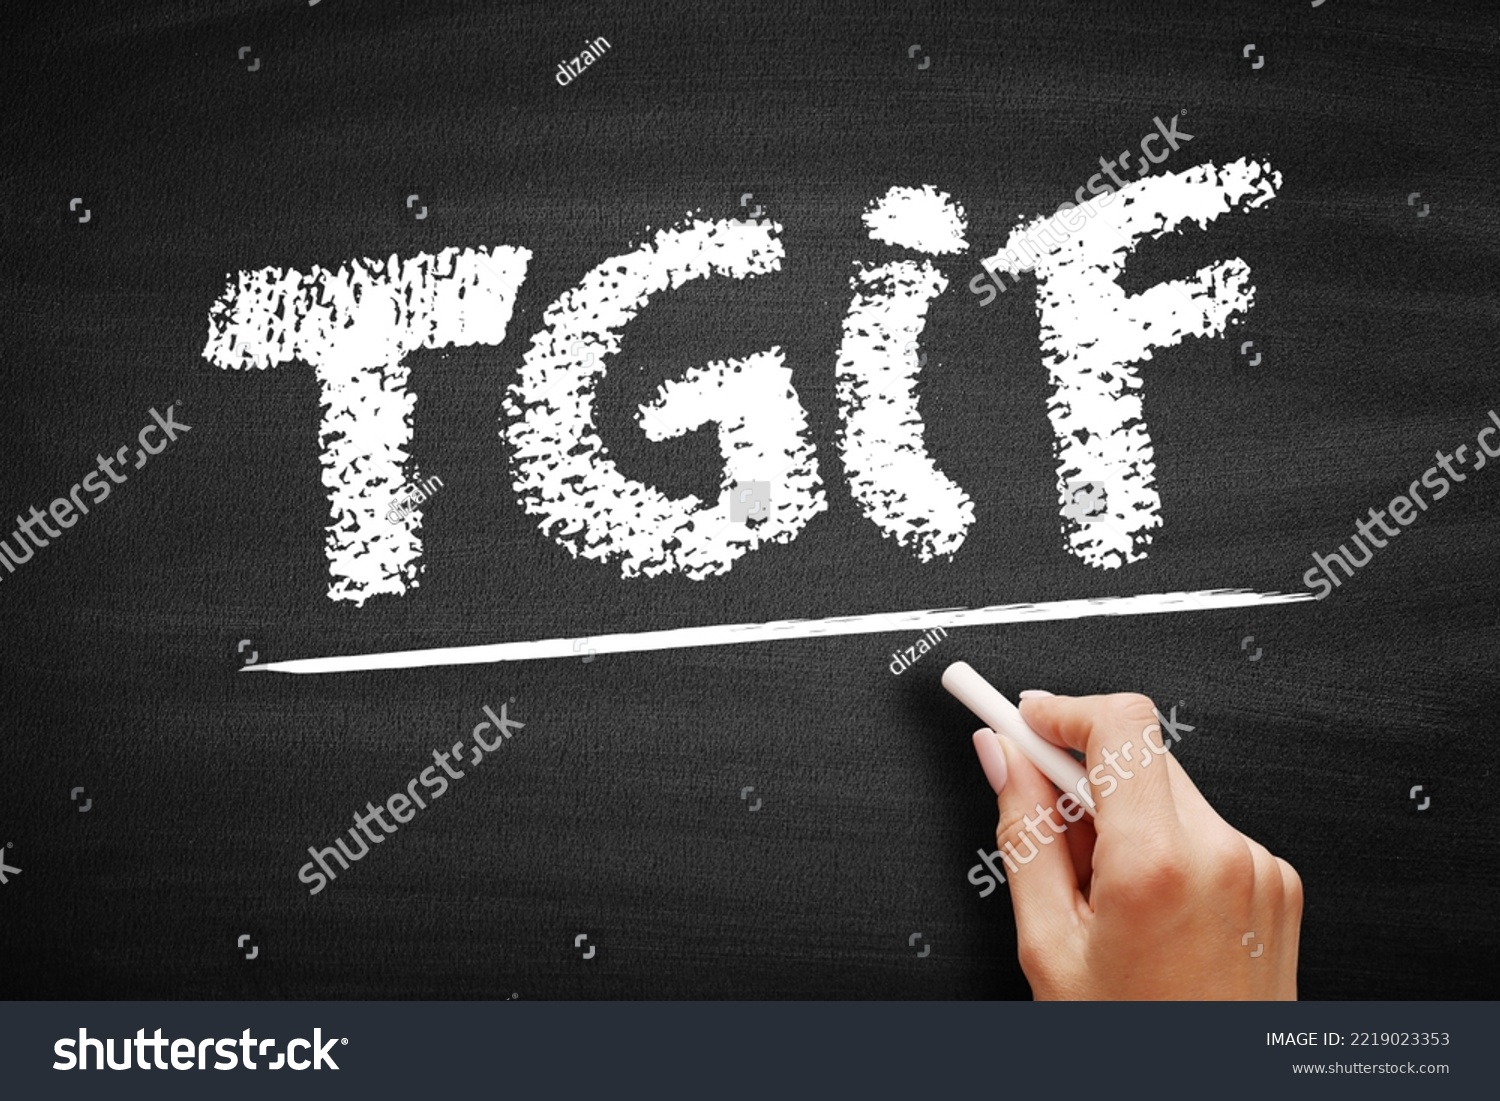 TGIF - Thank God It's Friday, acronym concept on blackboard #2219023353